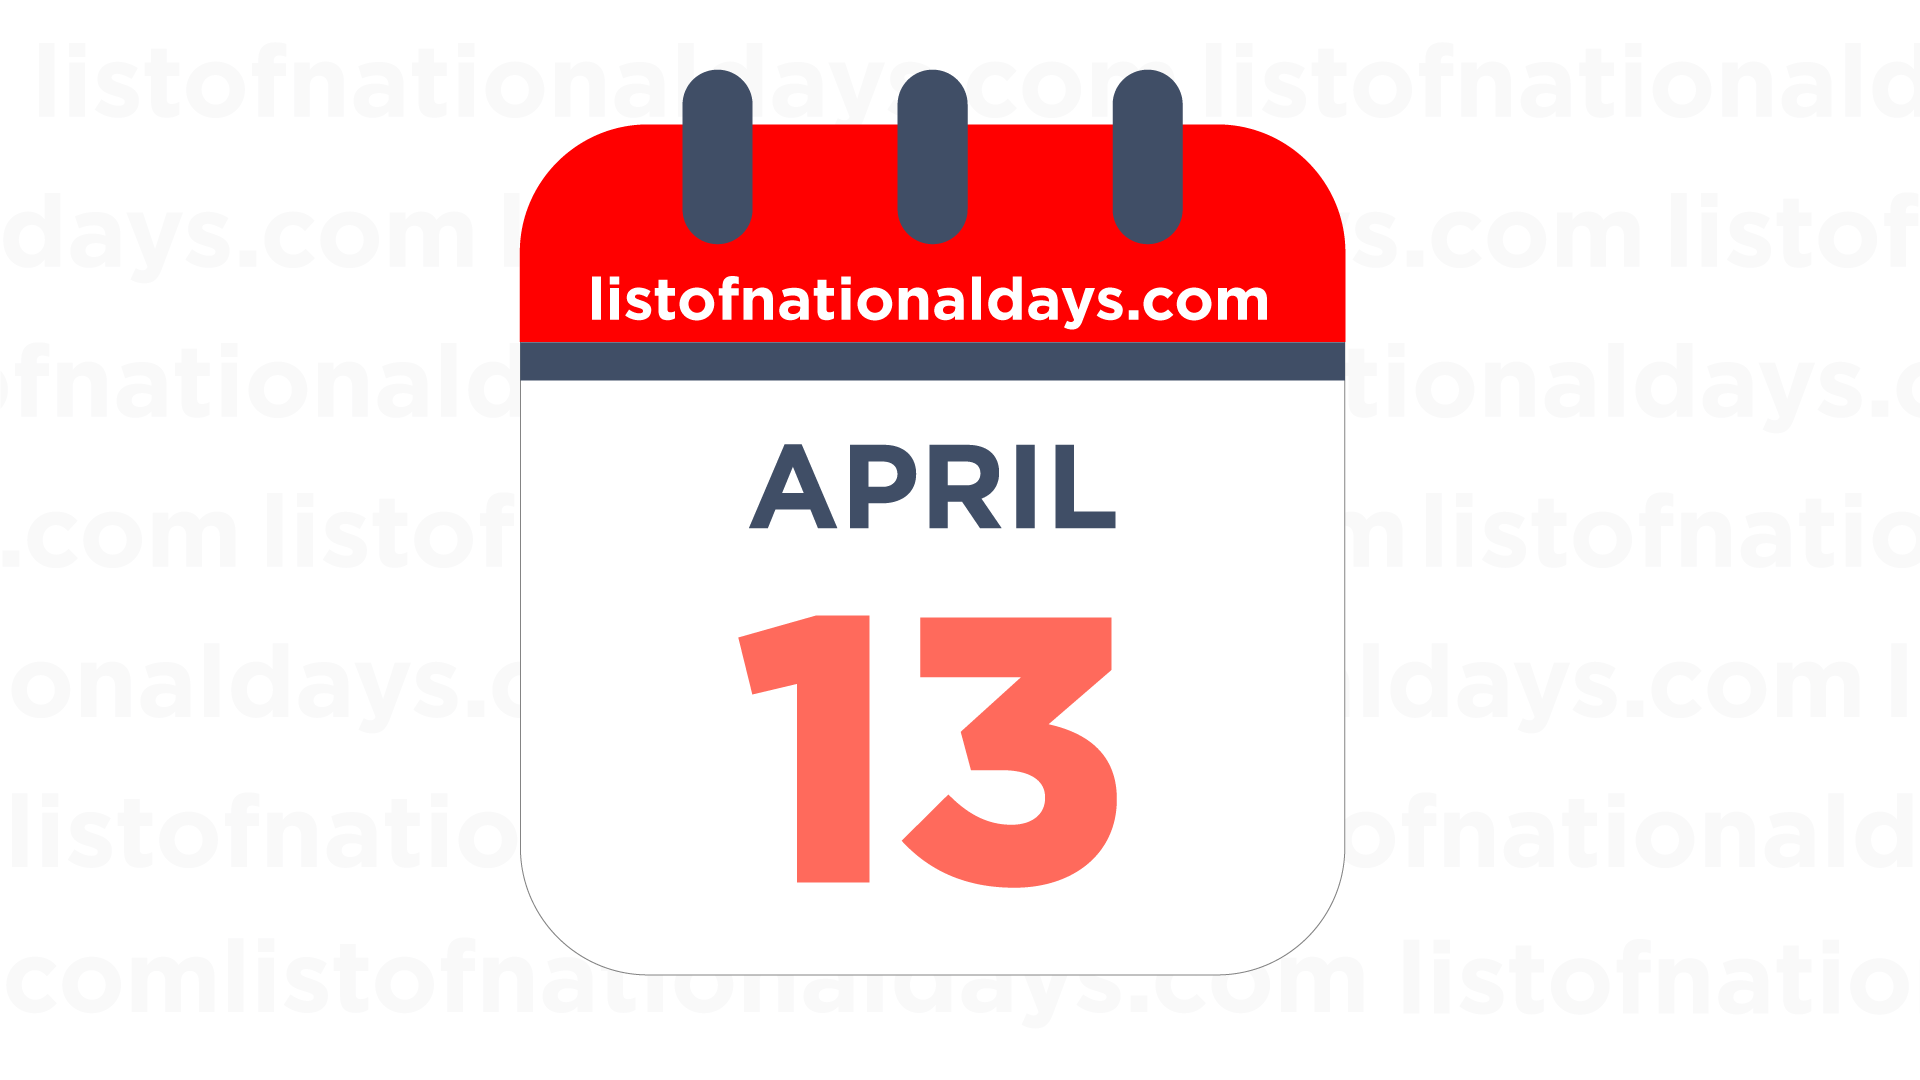 APRIL 13TH National Holidays, Observances & Famous Birthdays